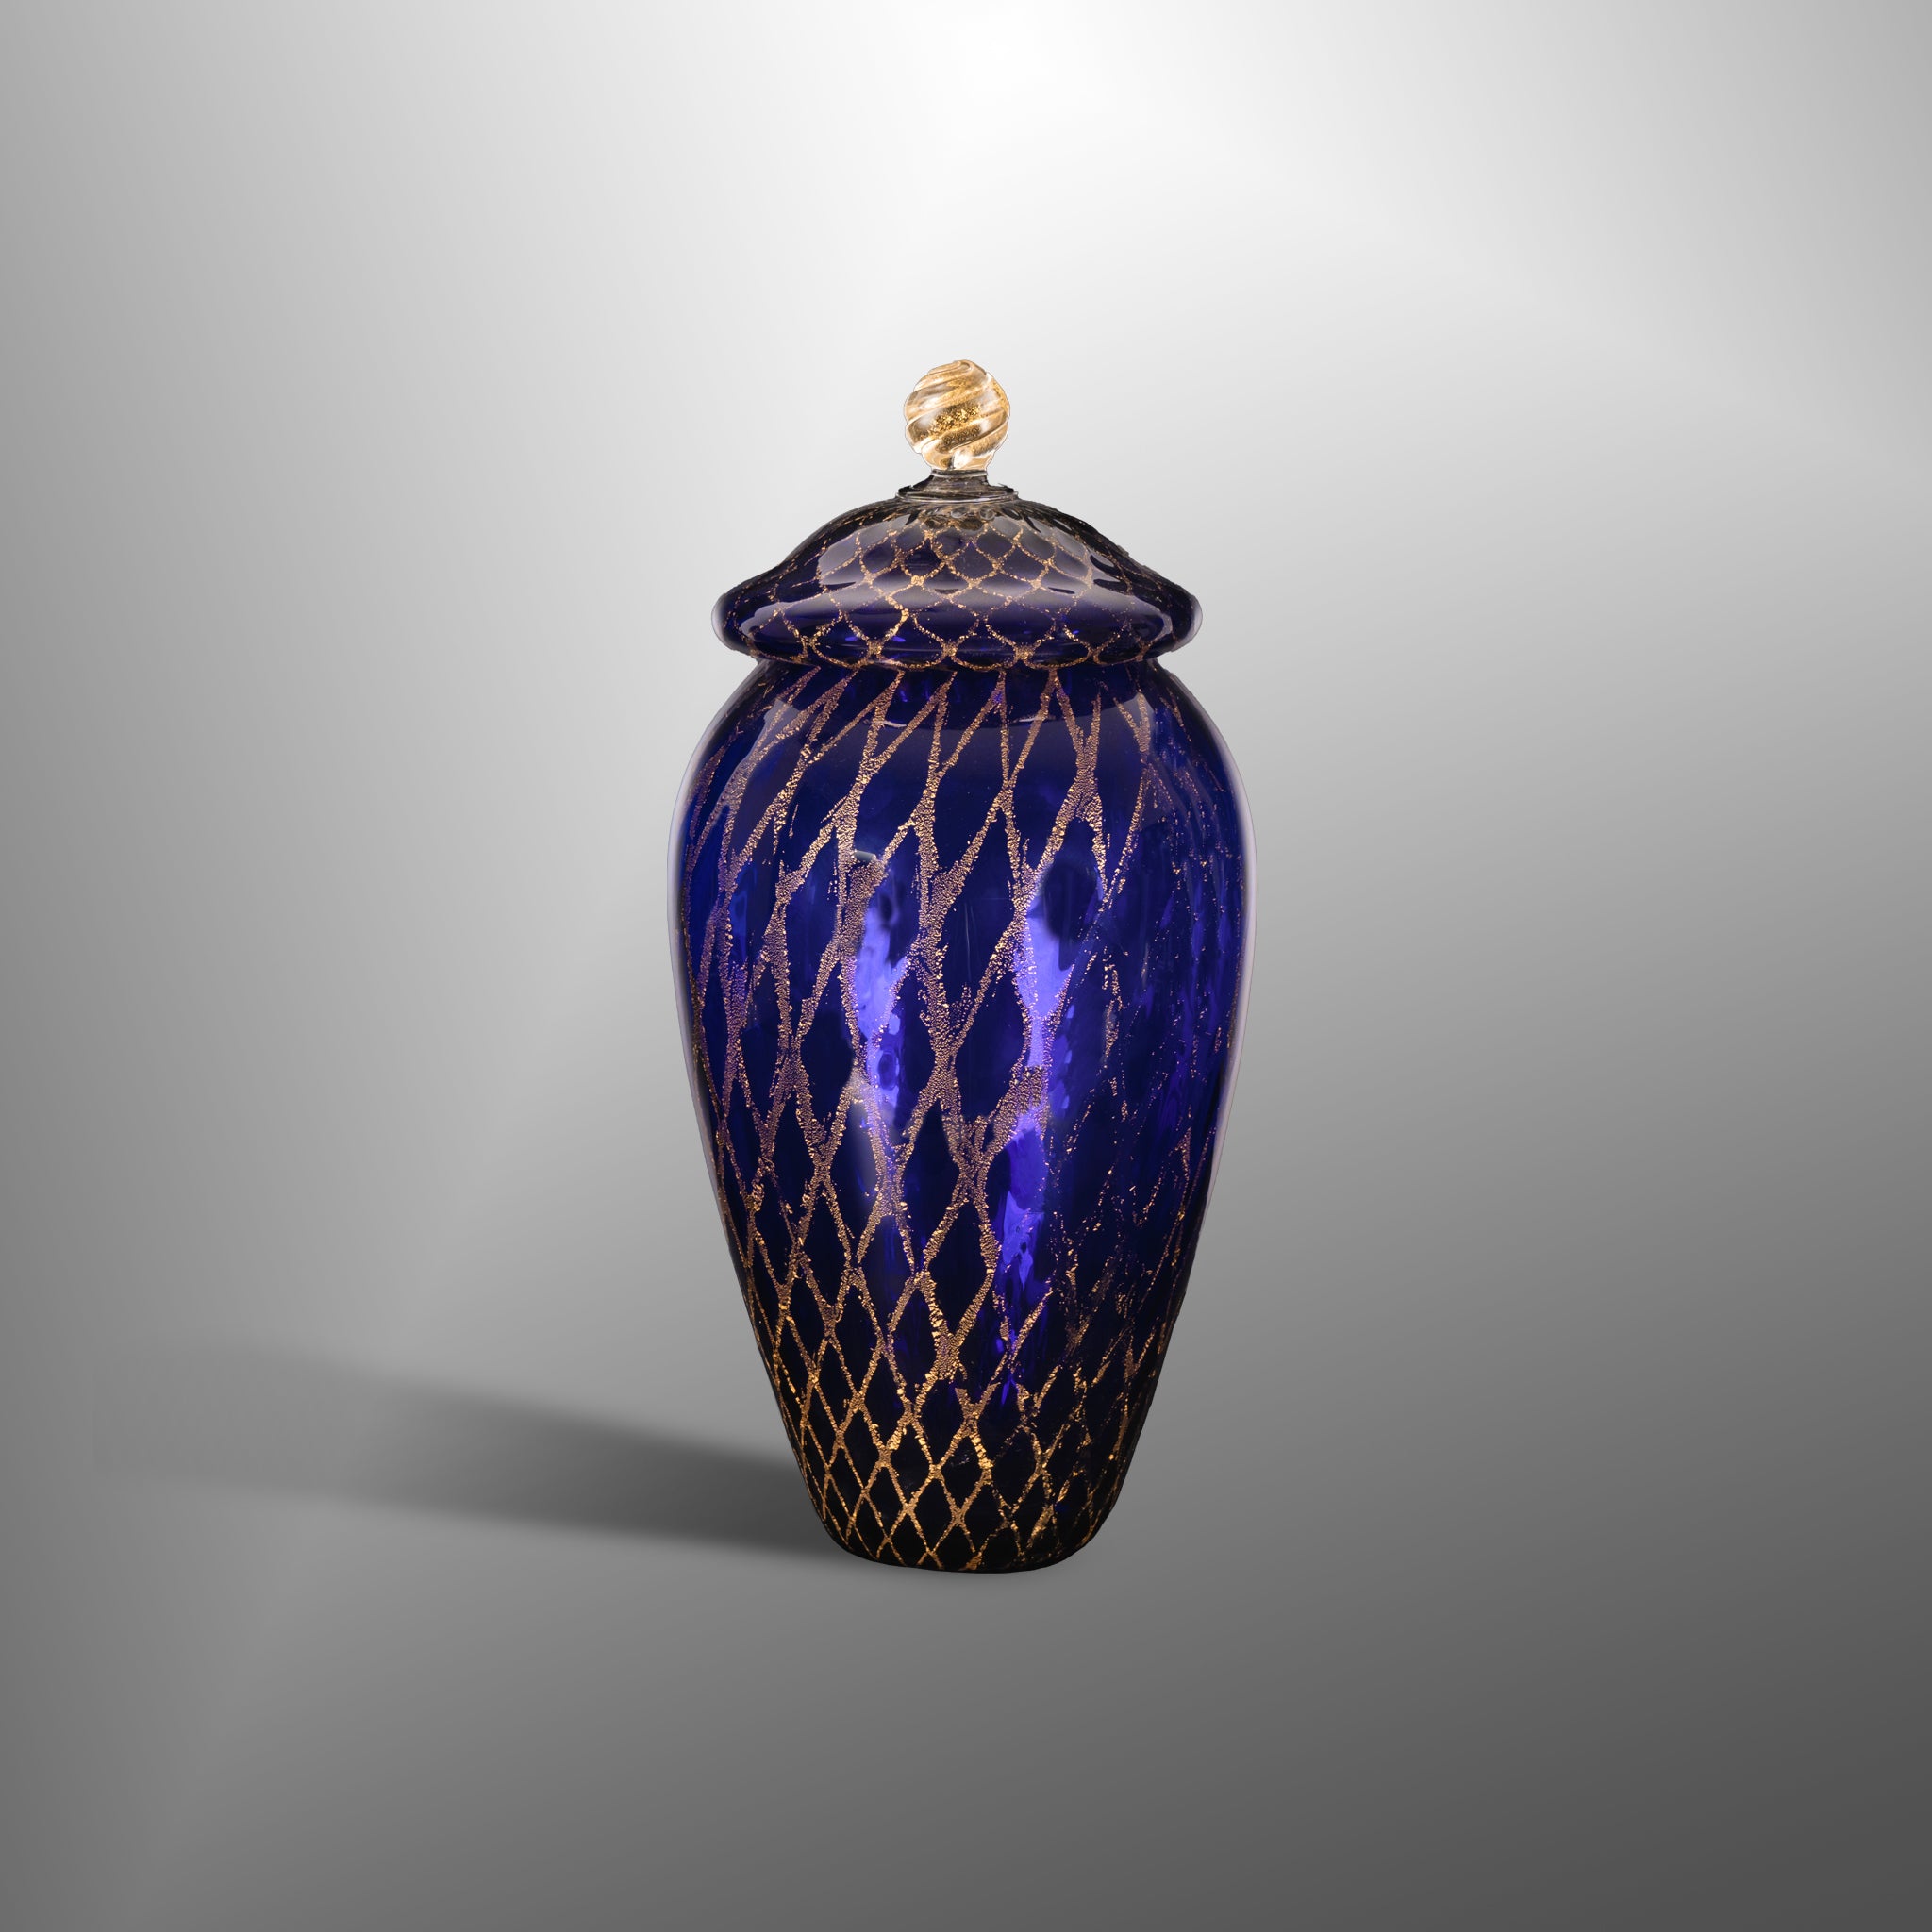 Vases in blue and violet